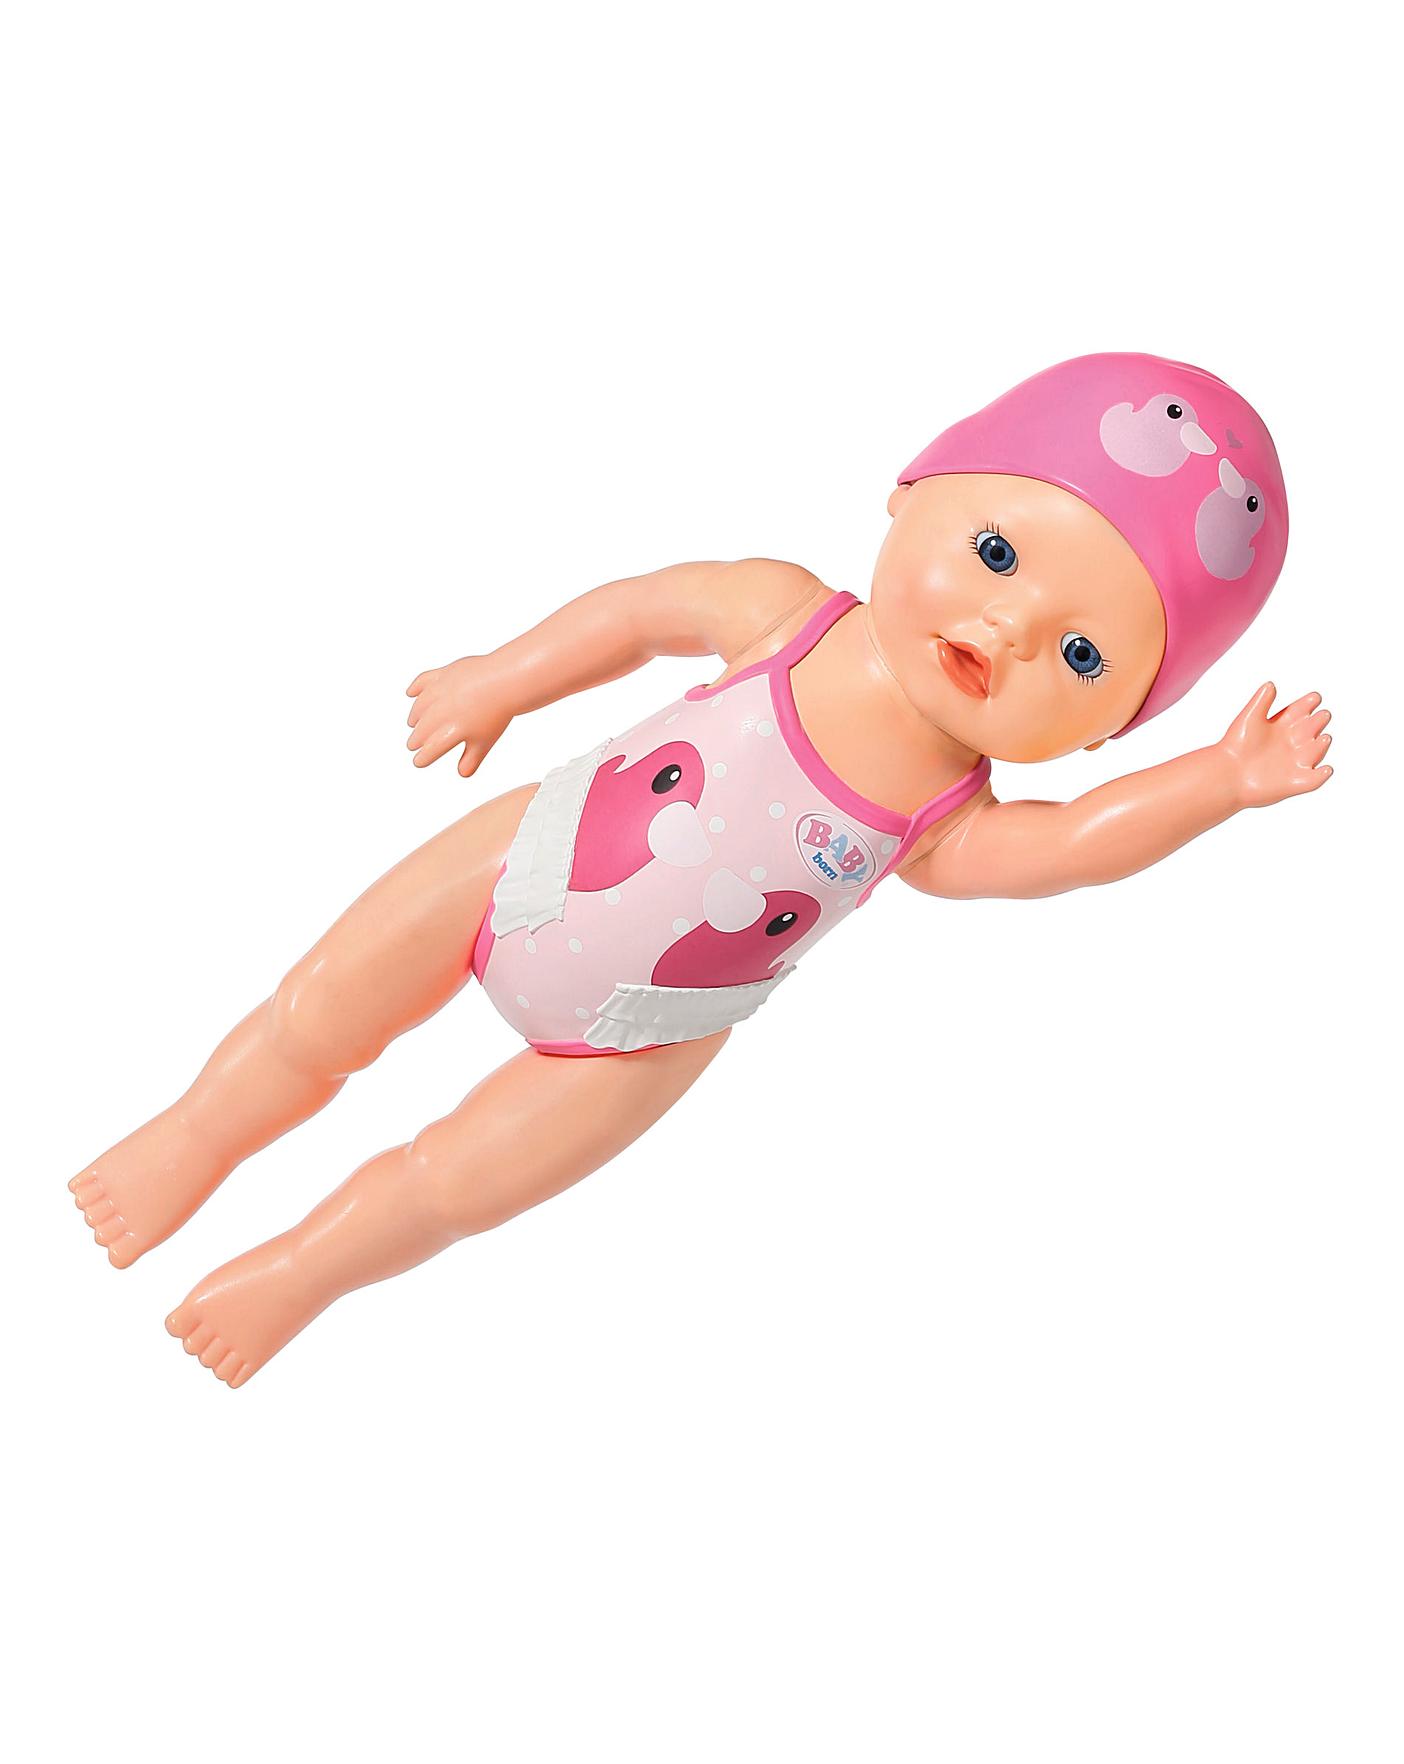 baby born swimming doll reviews